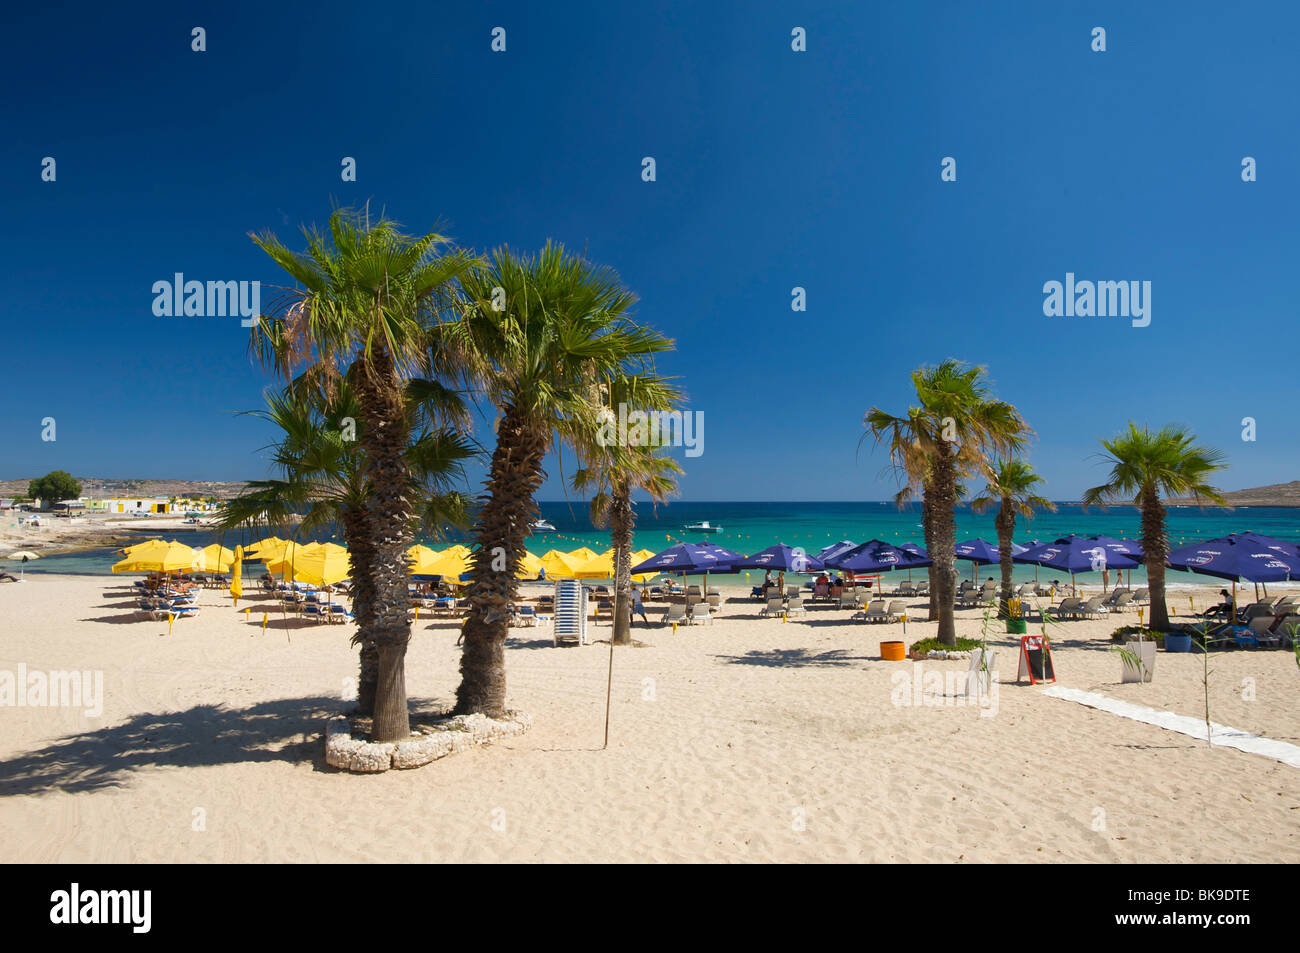 Palm beach of the Armier Bay, Malta, Europe Stock Photo